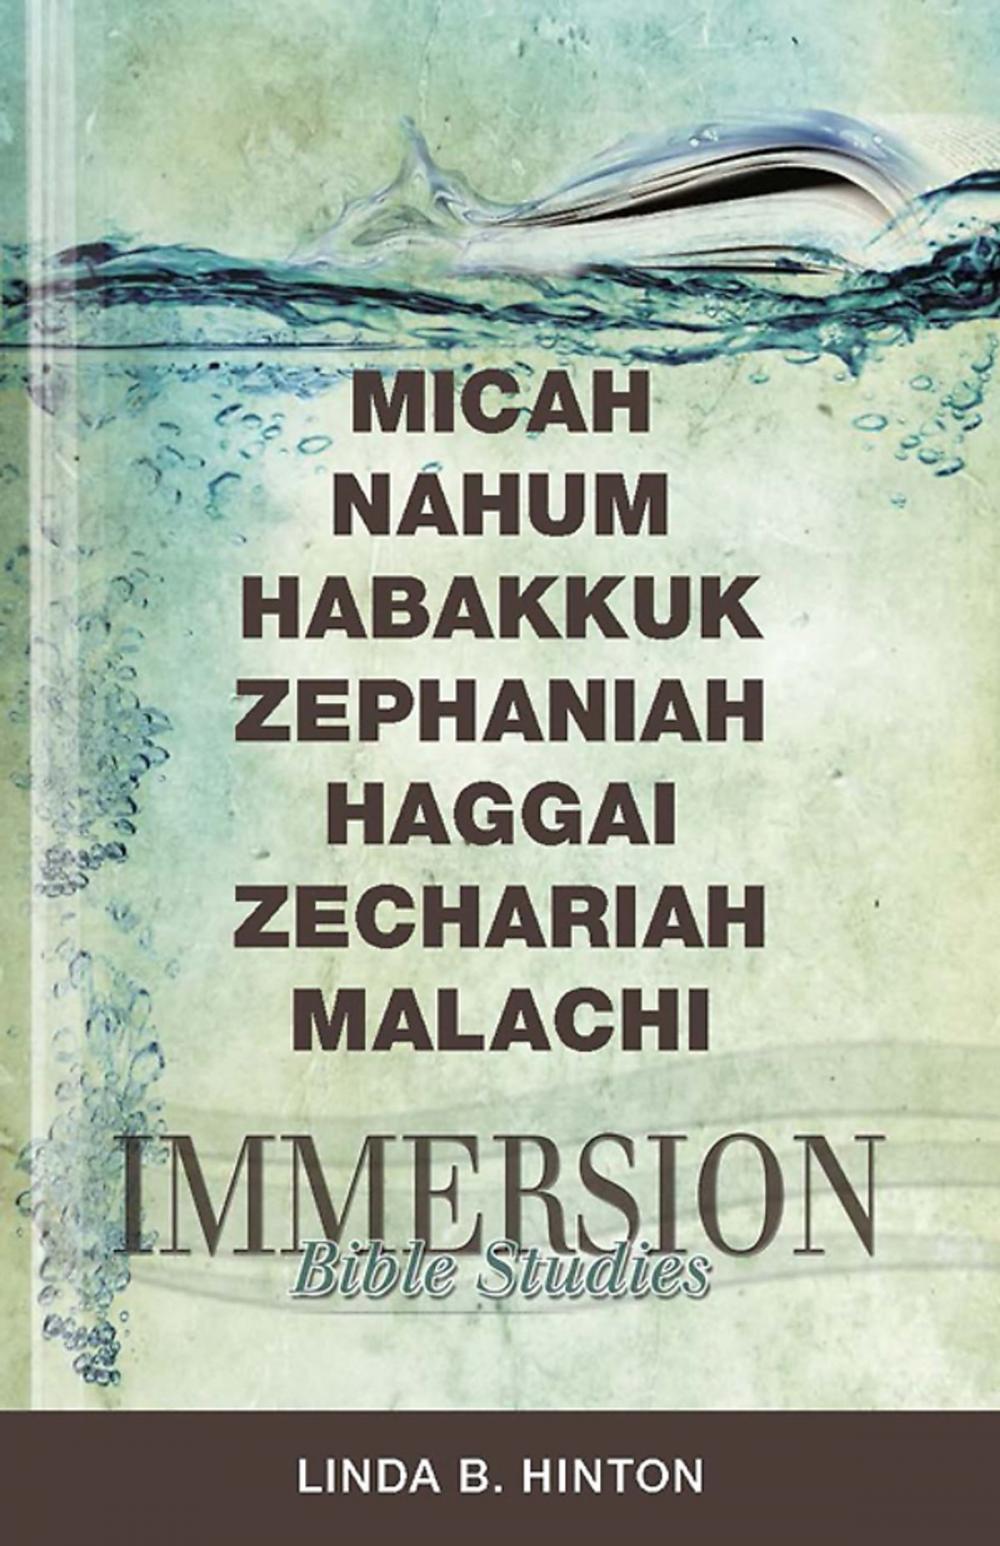 Big bigCover of Immersion Bible Studies: Micah, Nahum, Habakkuk, Zephaniah, Haggai, Zechariah, Malachi